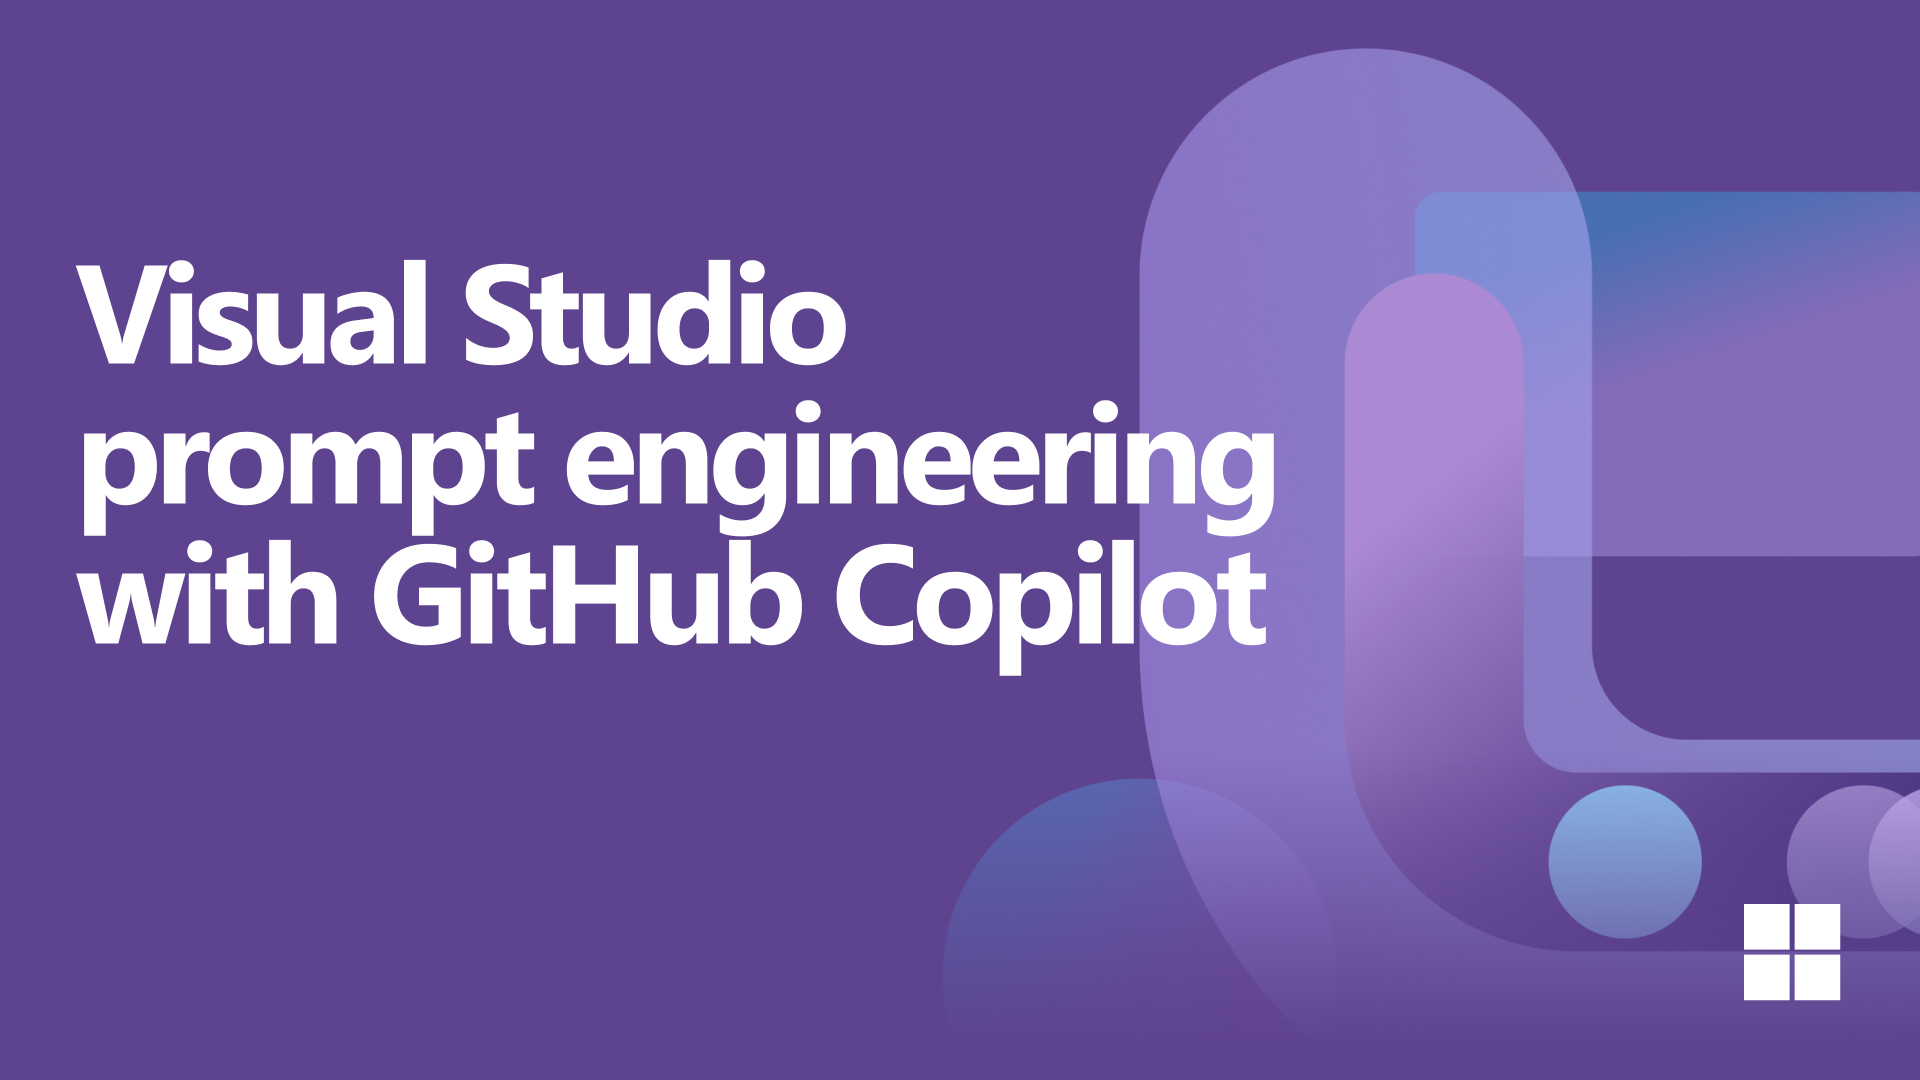 Visual Studio Copilot video thumbnail